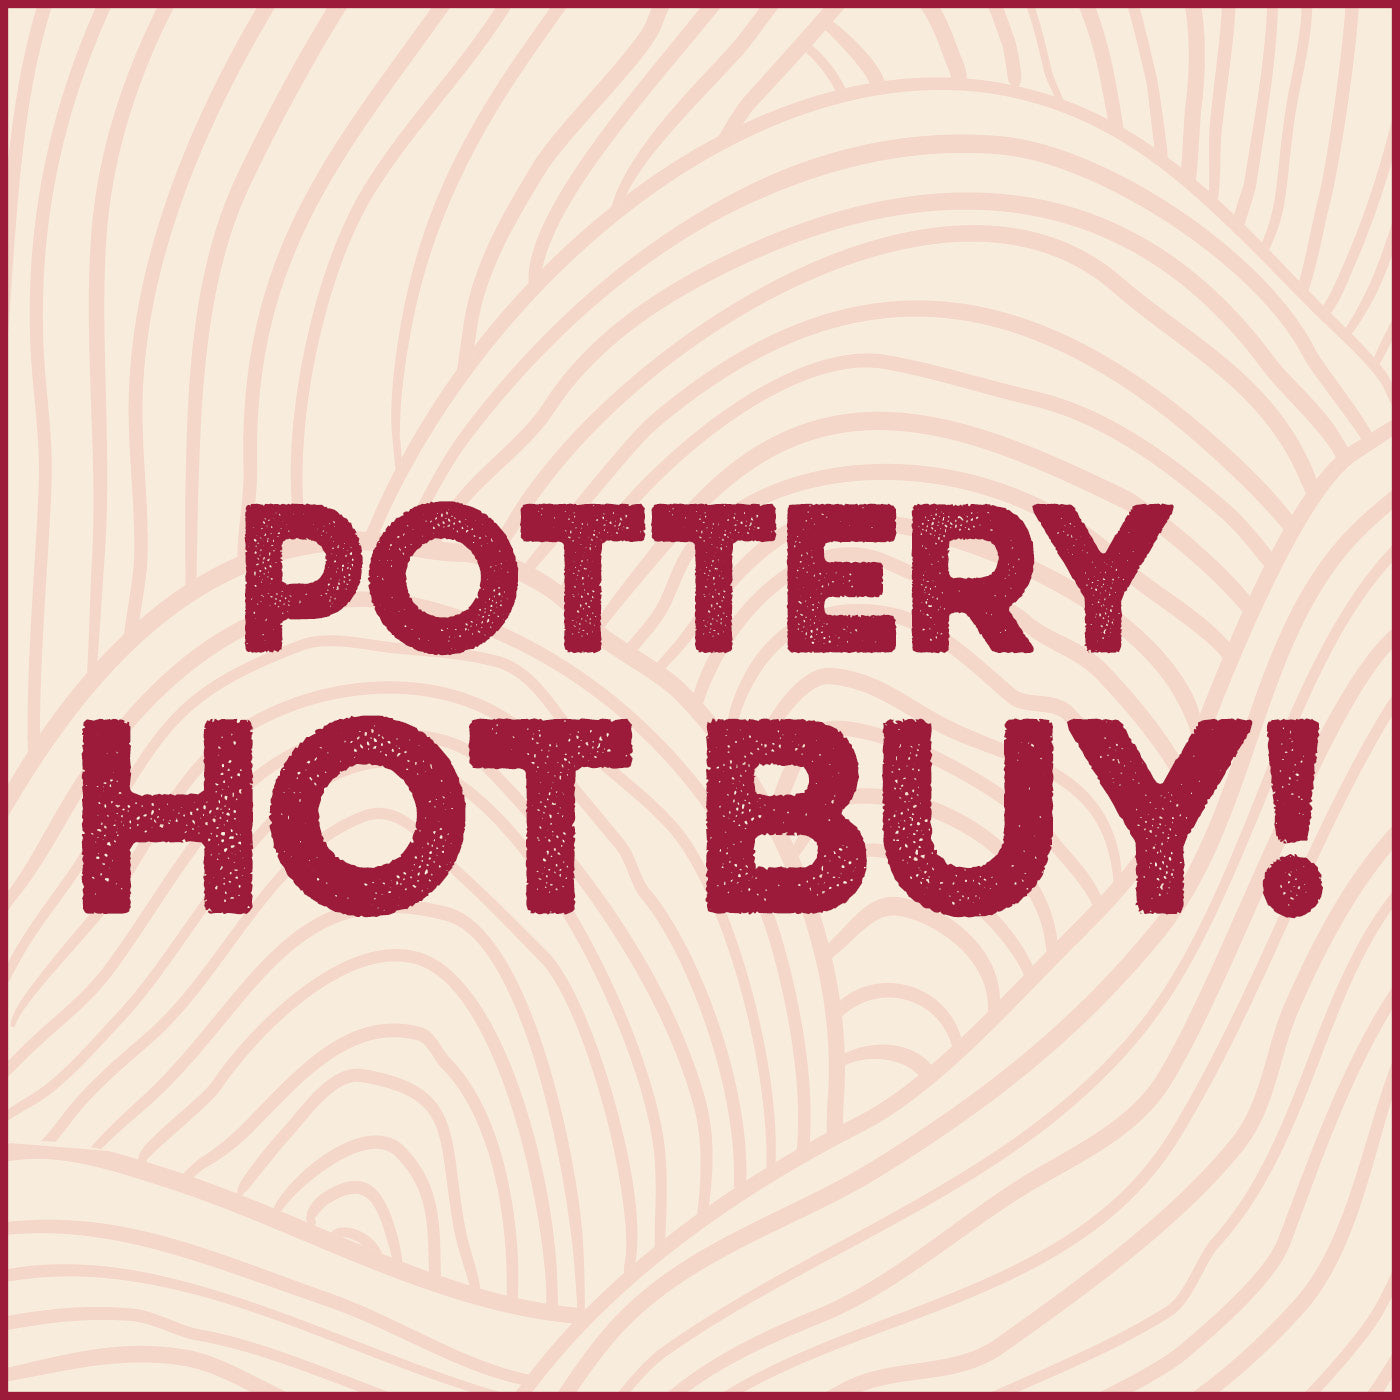 Pottery Hot Buy!